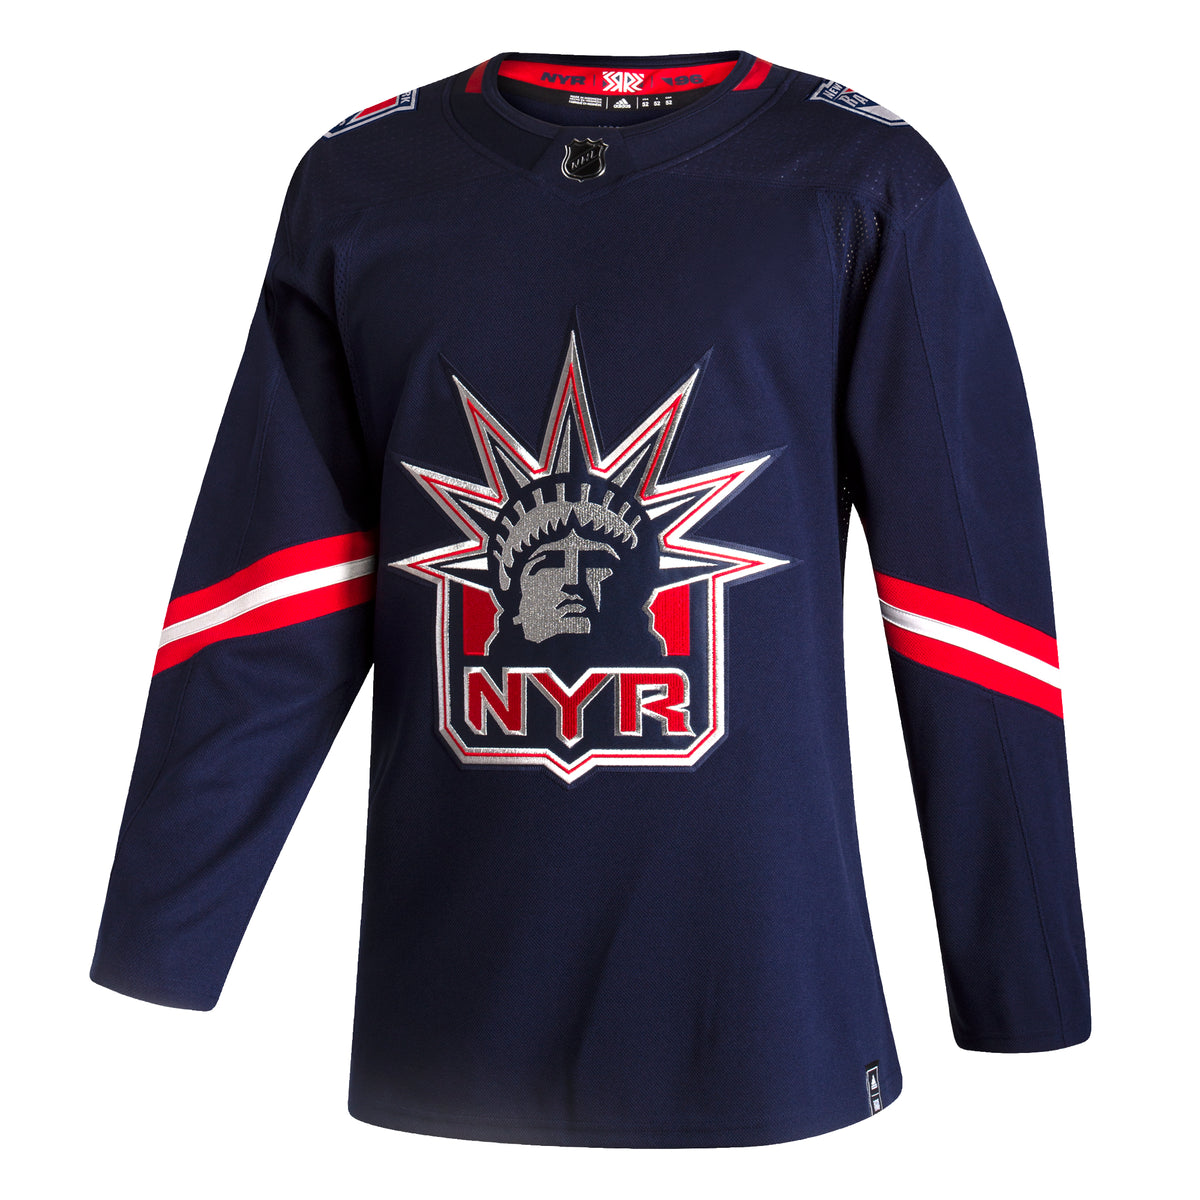 New York Islanders Throwback Jerseys, Vintage NHL Gear